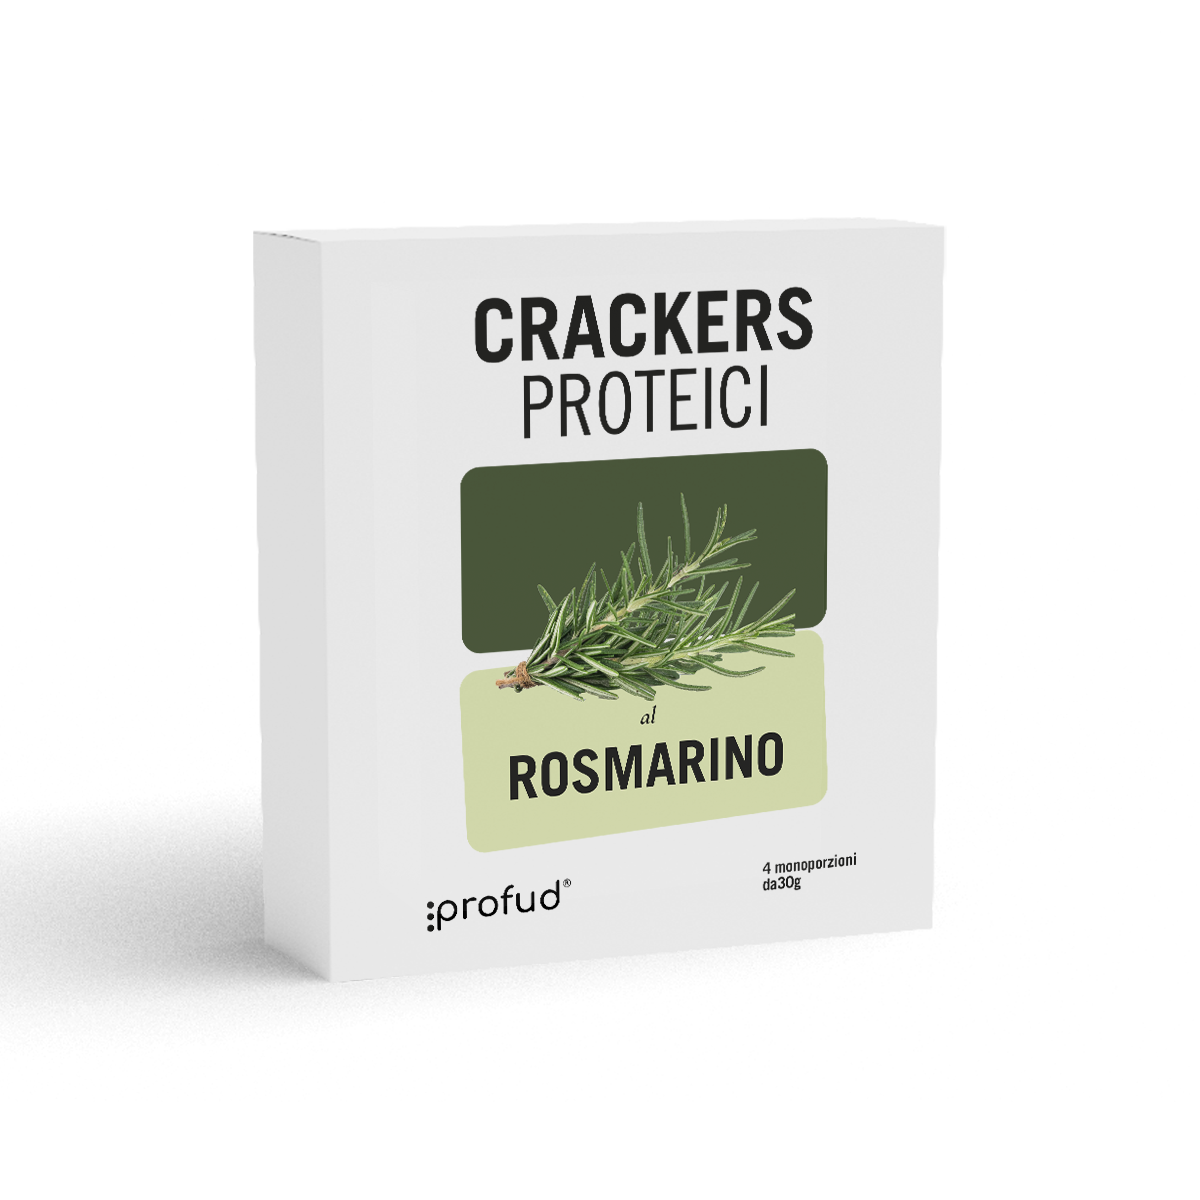 Crackers Proteici Rosmarino Profud